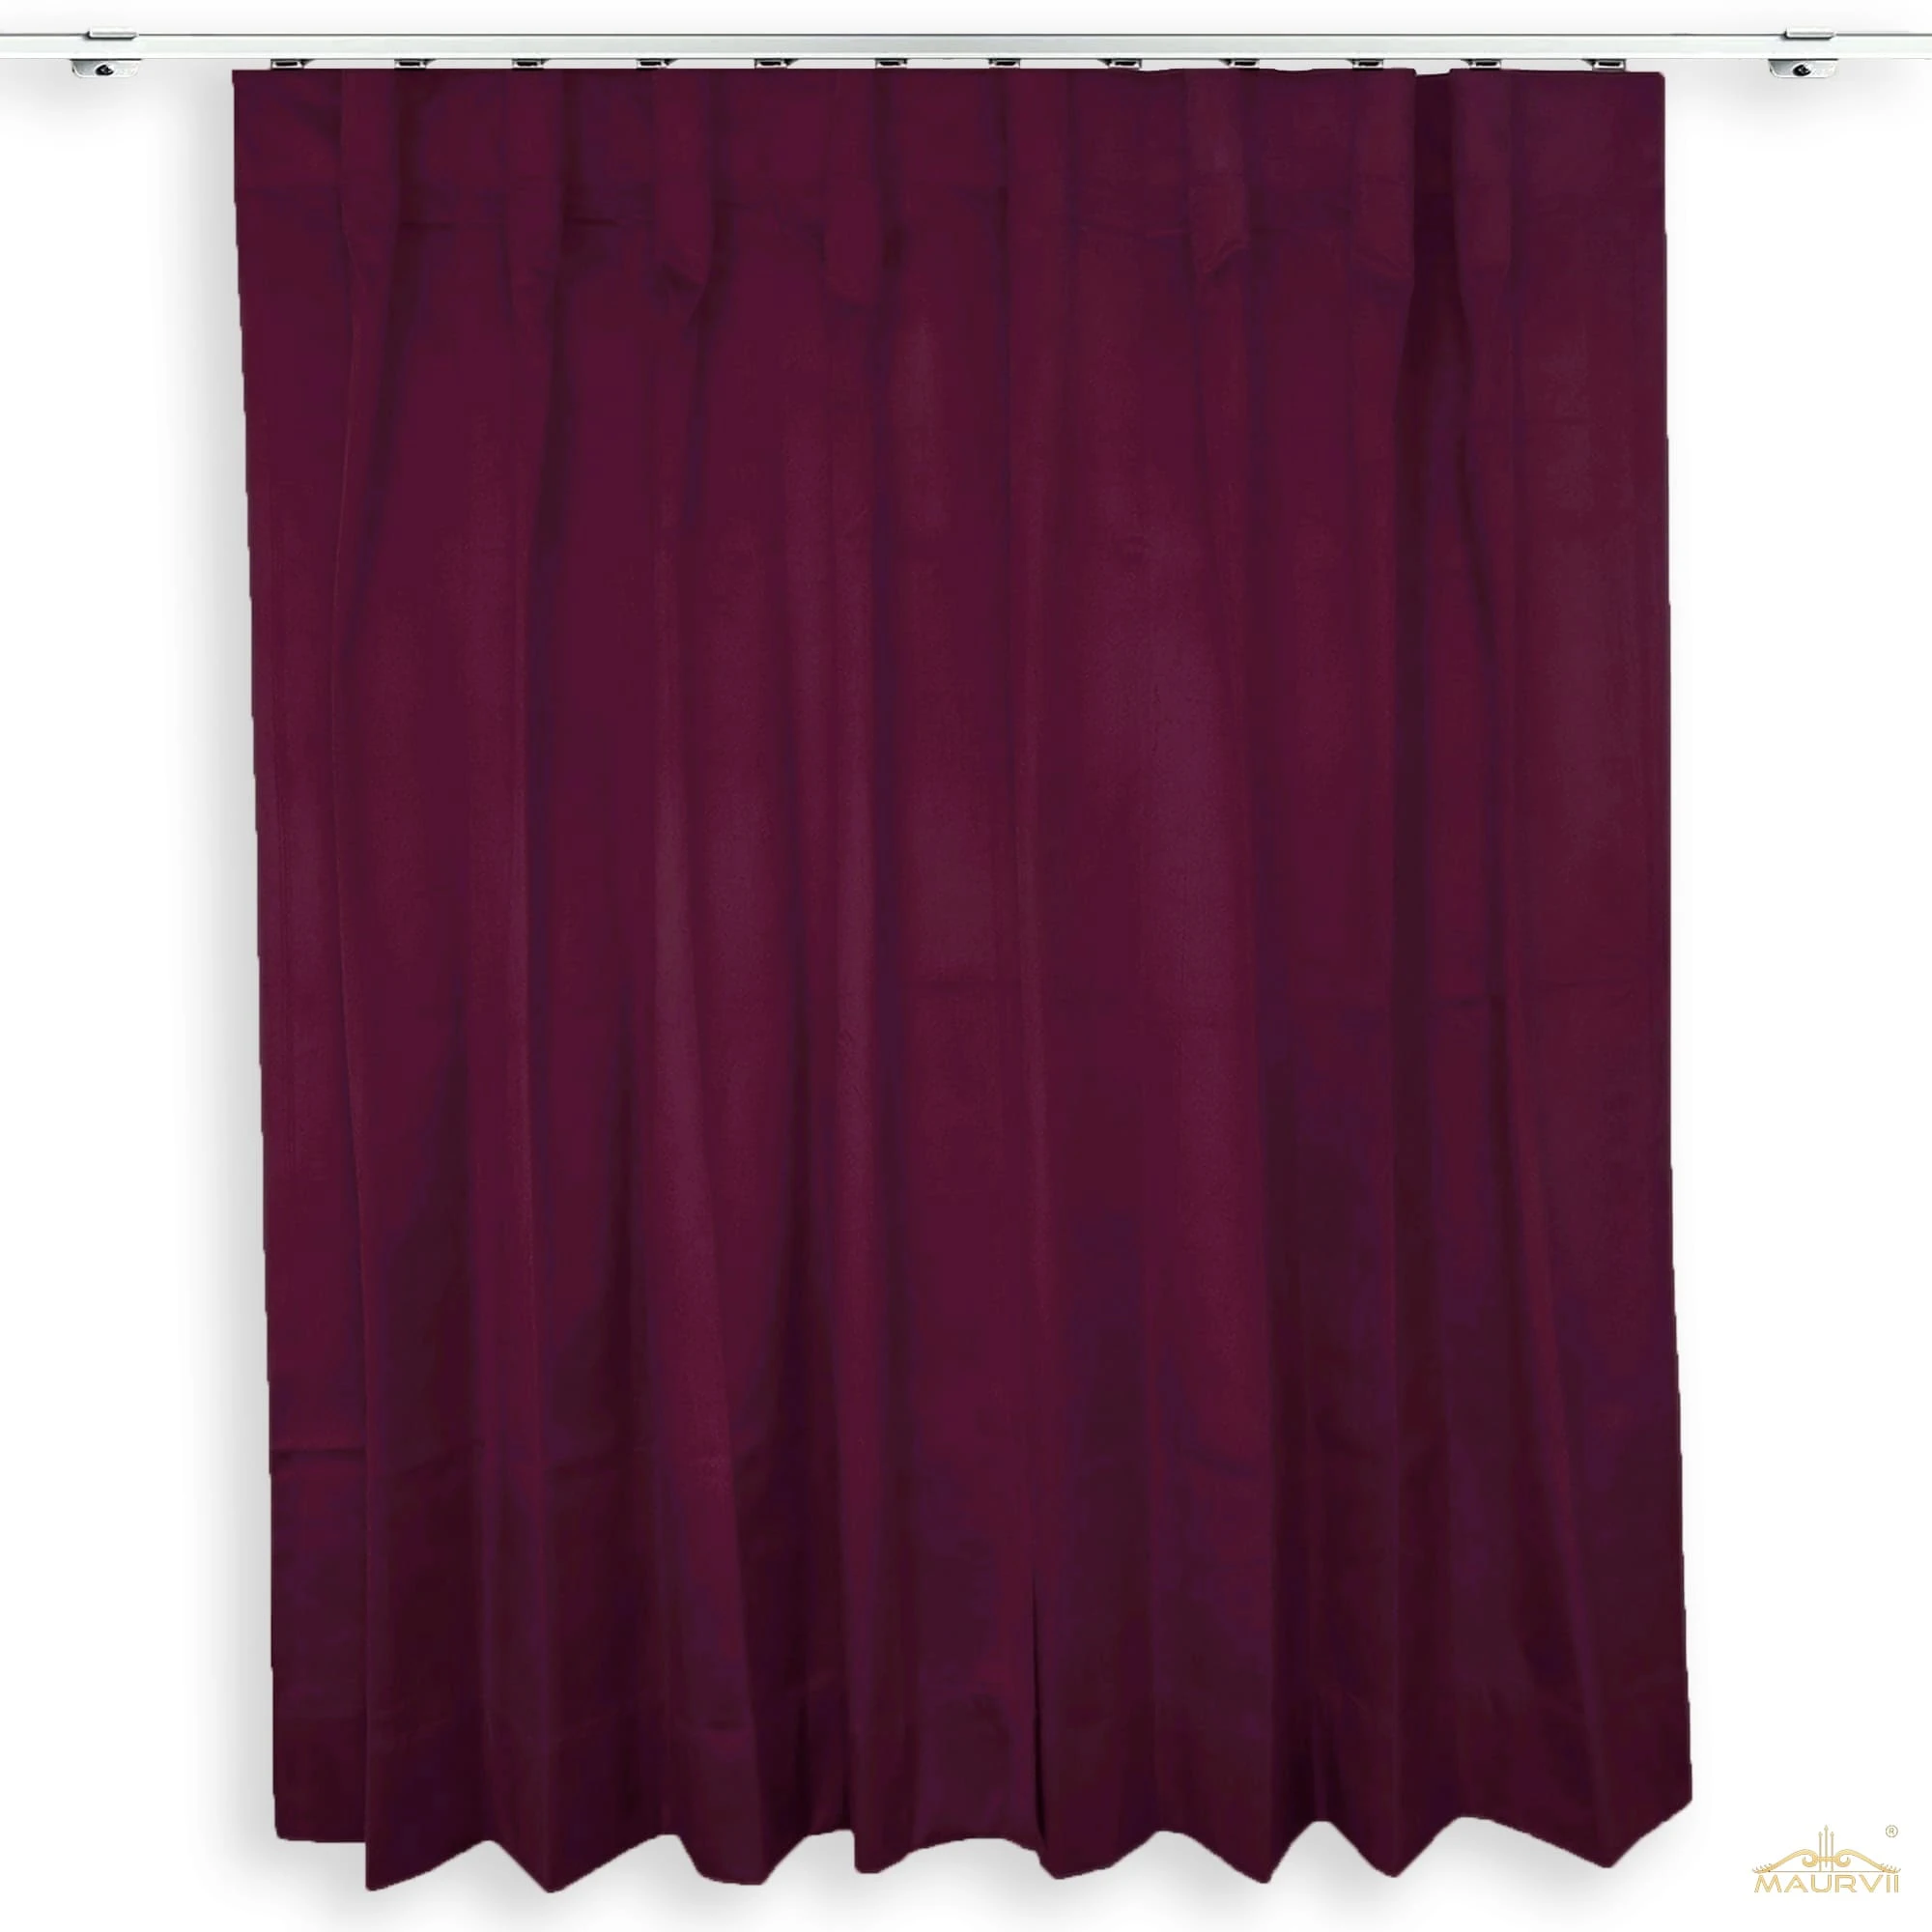 Triple pleated velvet curtains in burgundy color